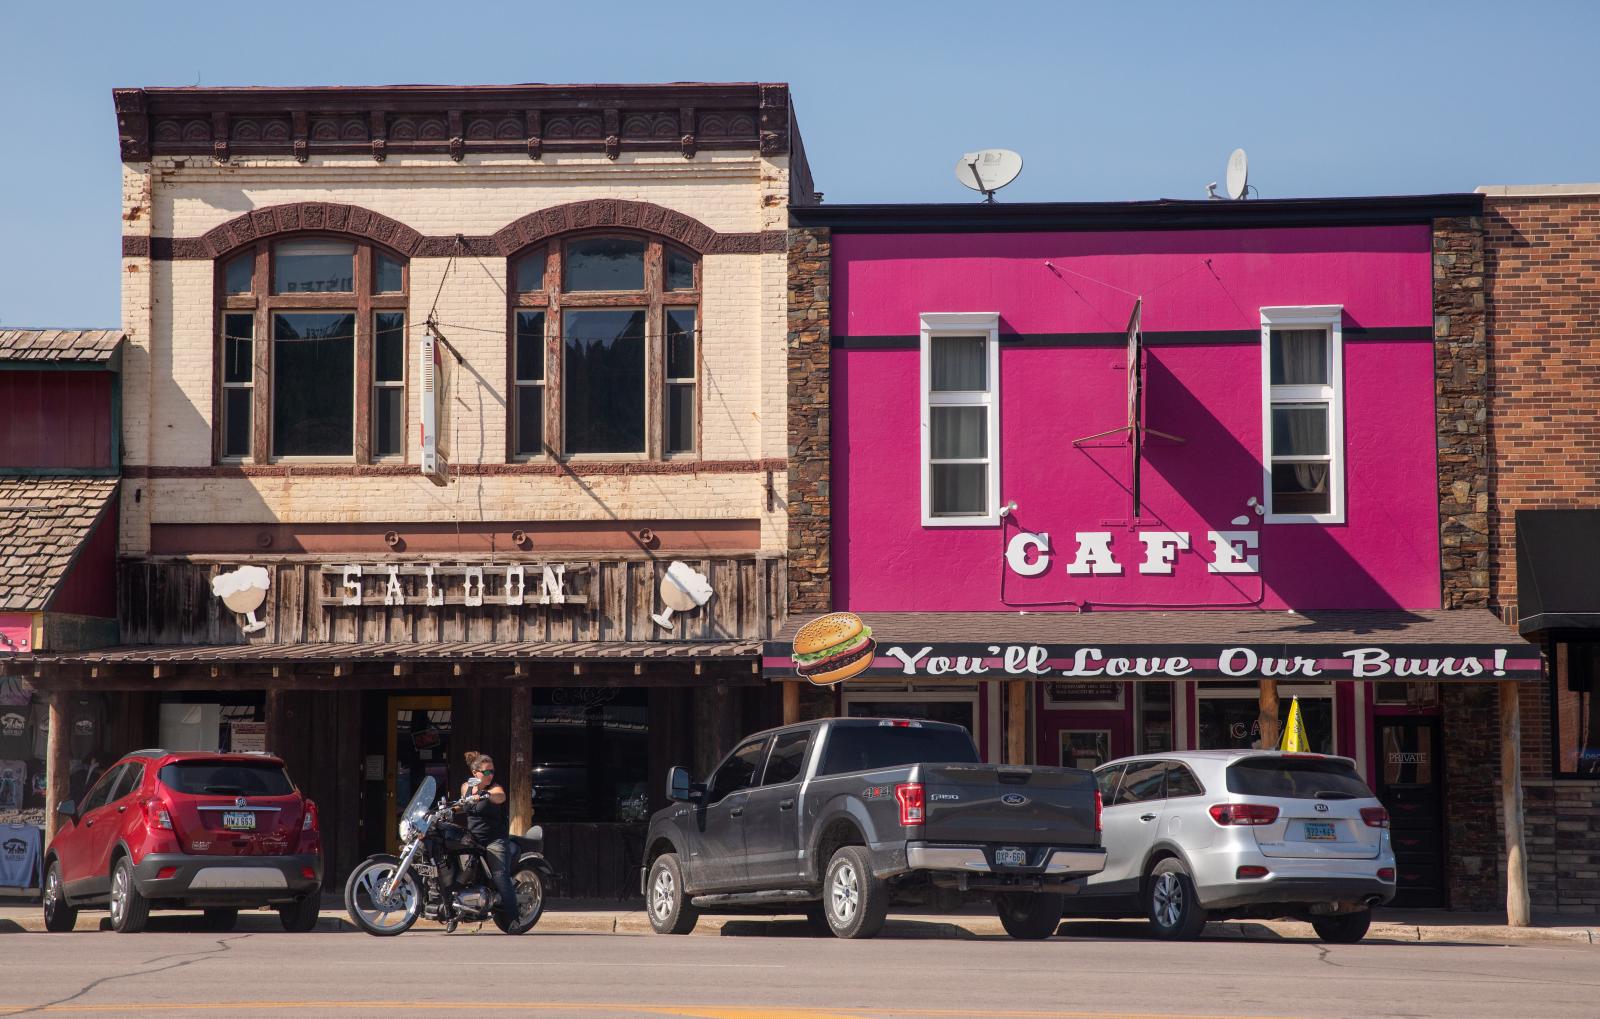 Sixth Stop: Custer, South Dakota